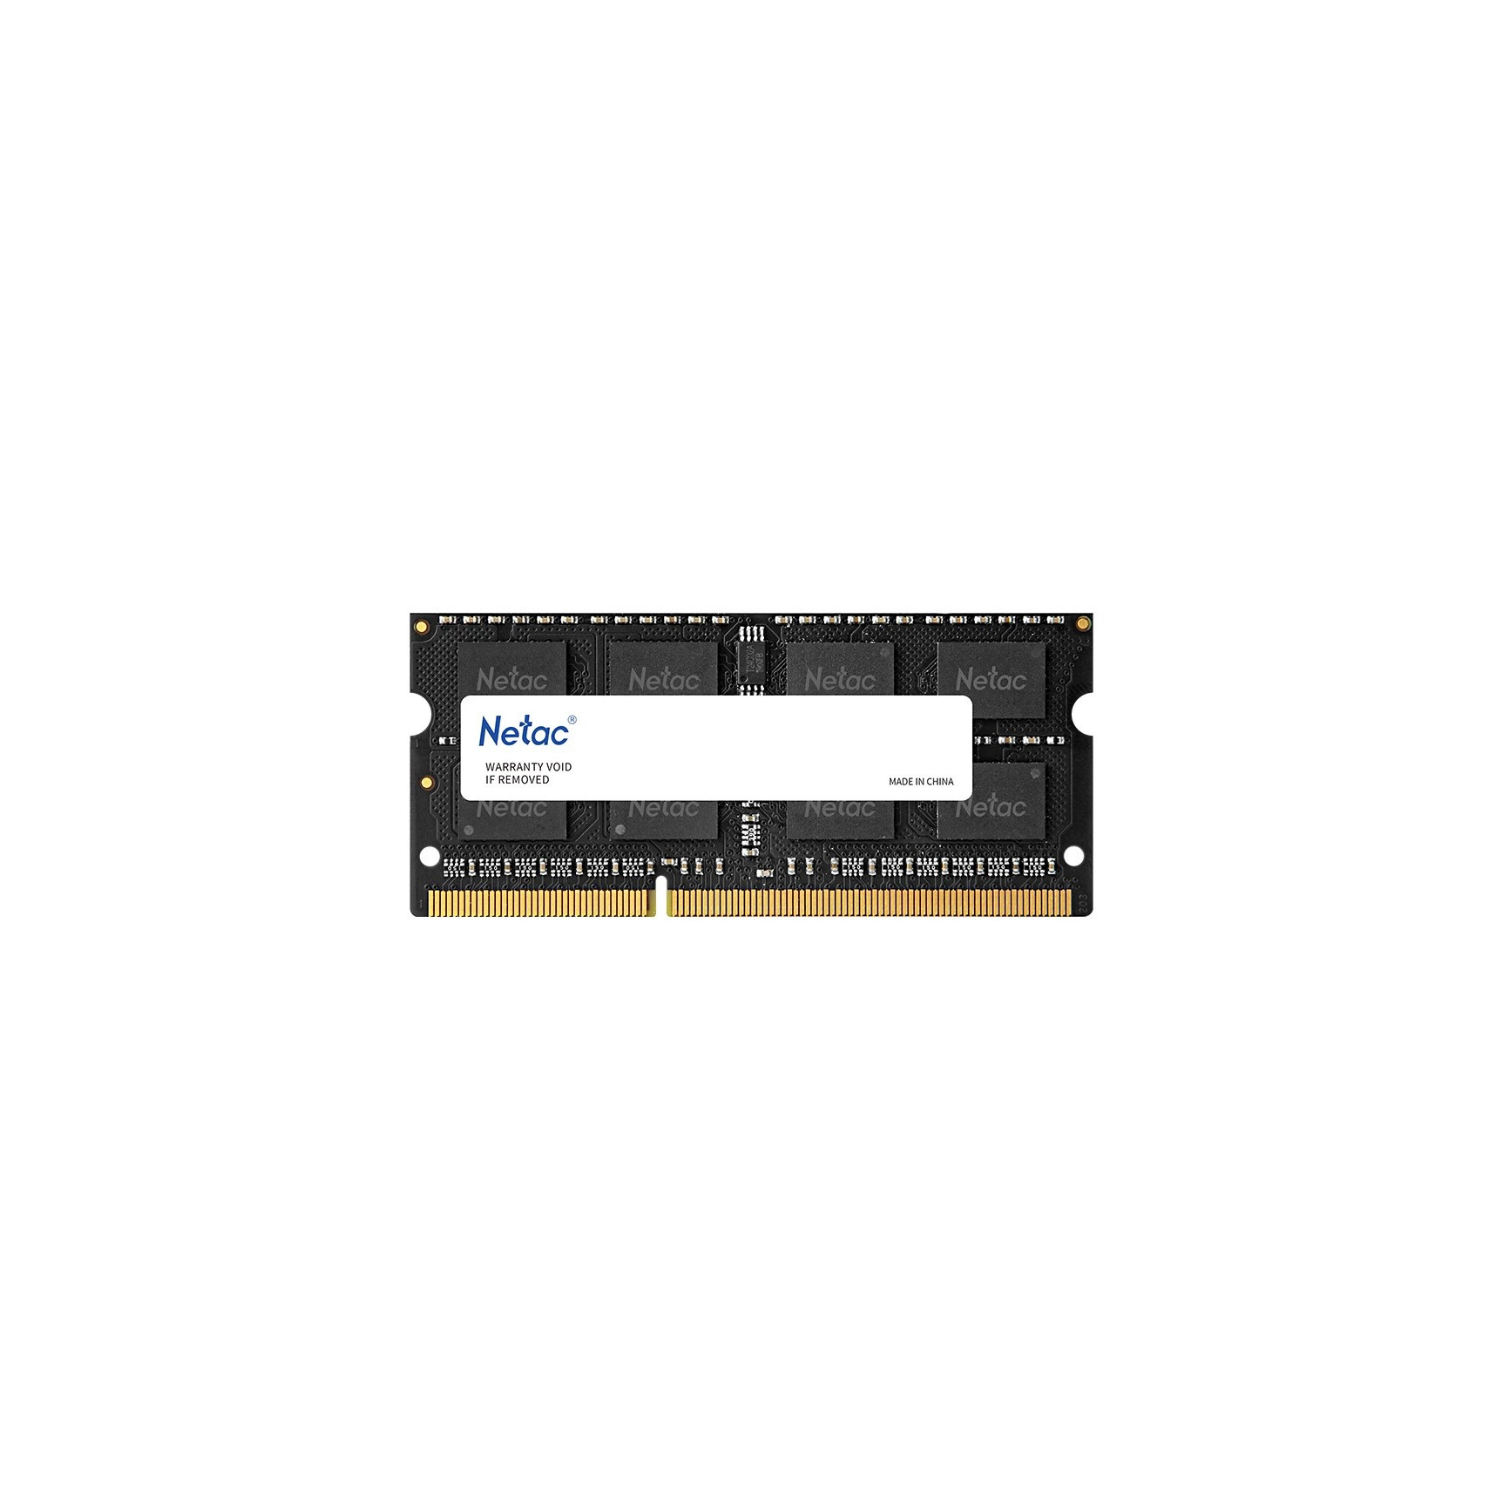 New Netac 8GB DDR3 Ram 1600MHz Laptop Memory Ram 1.35V PC3-12800 204-Pin SO-DIMM